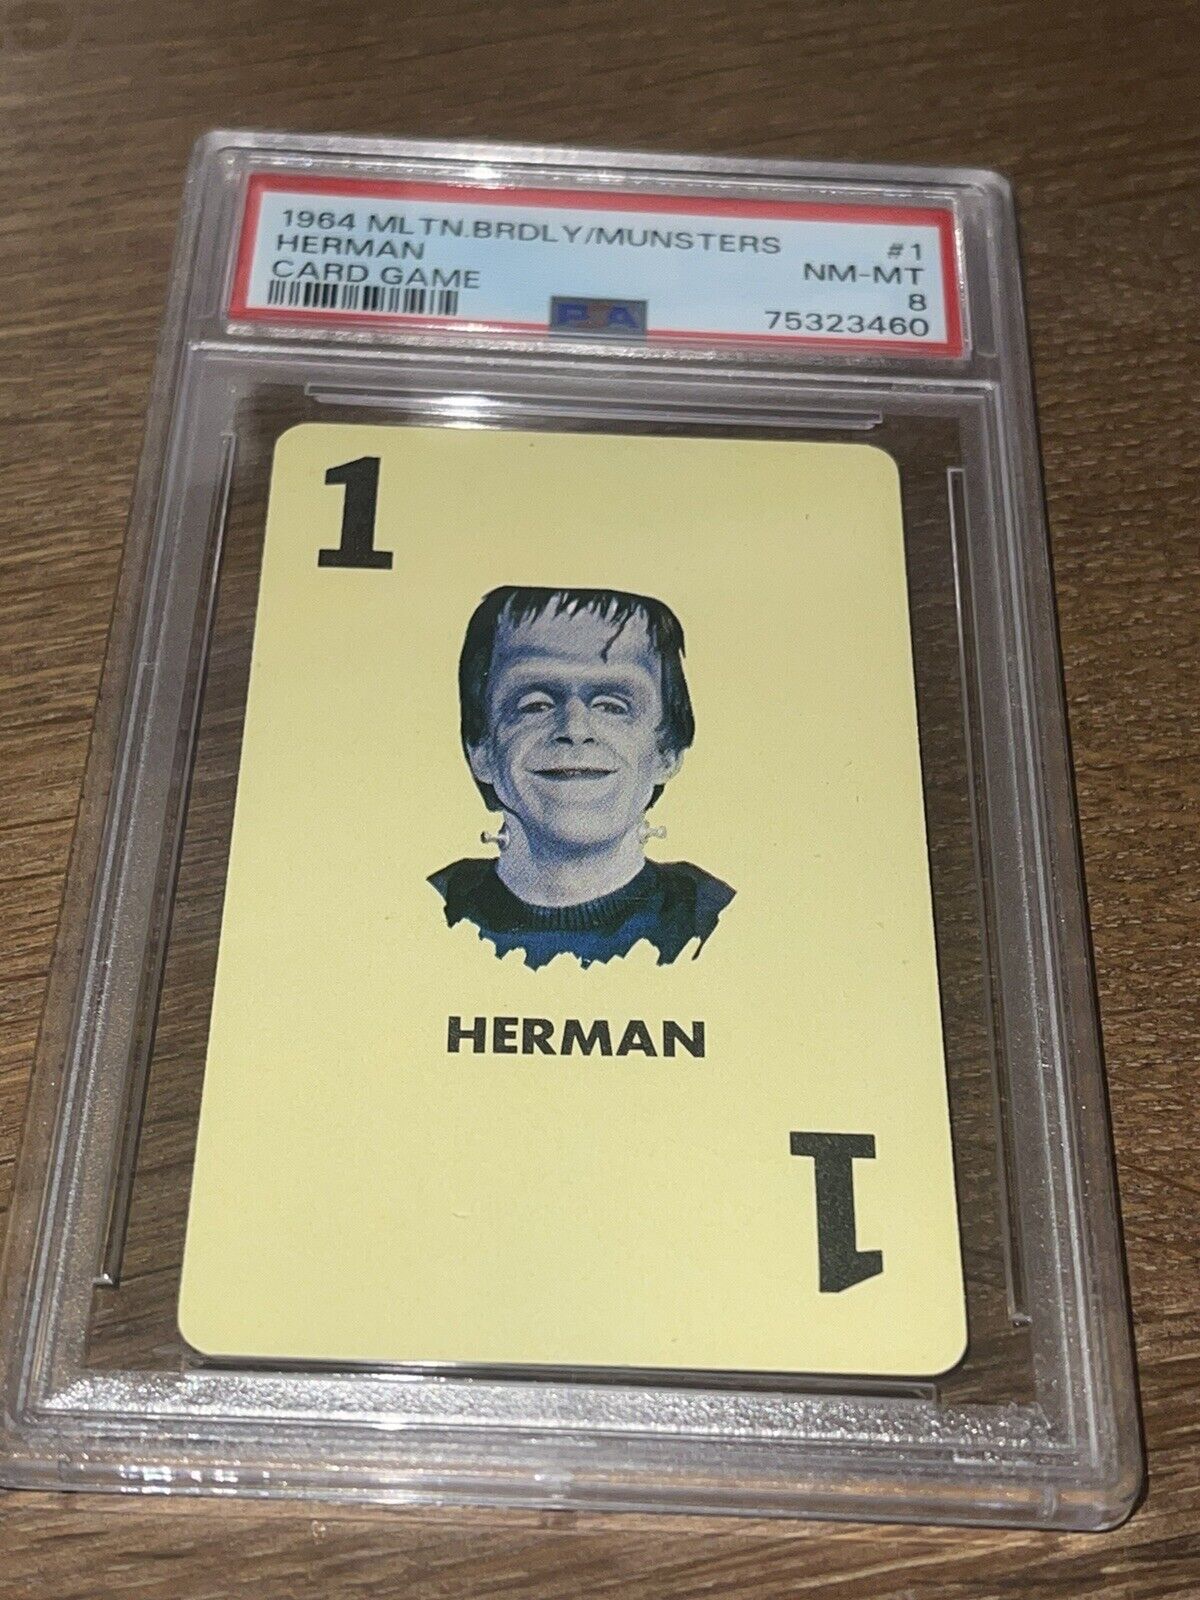 RARE VINTAGE 1964 MILTON BRADLEY MUNSTERS HERMAN CARD GAME ROOKIE PSA 8 NM-MINT